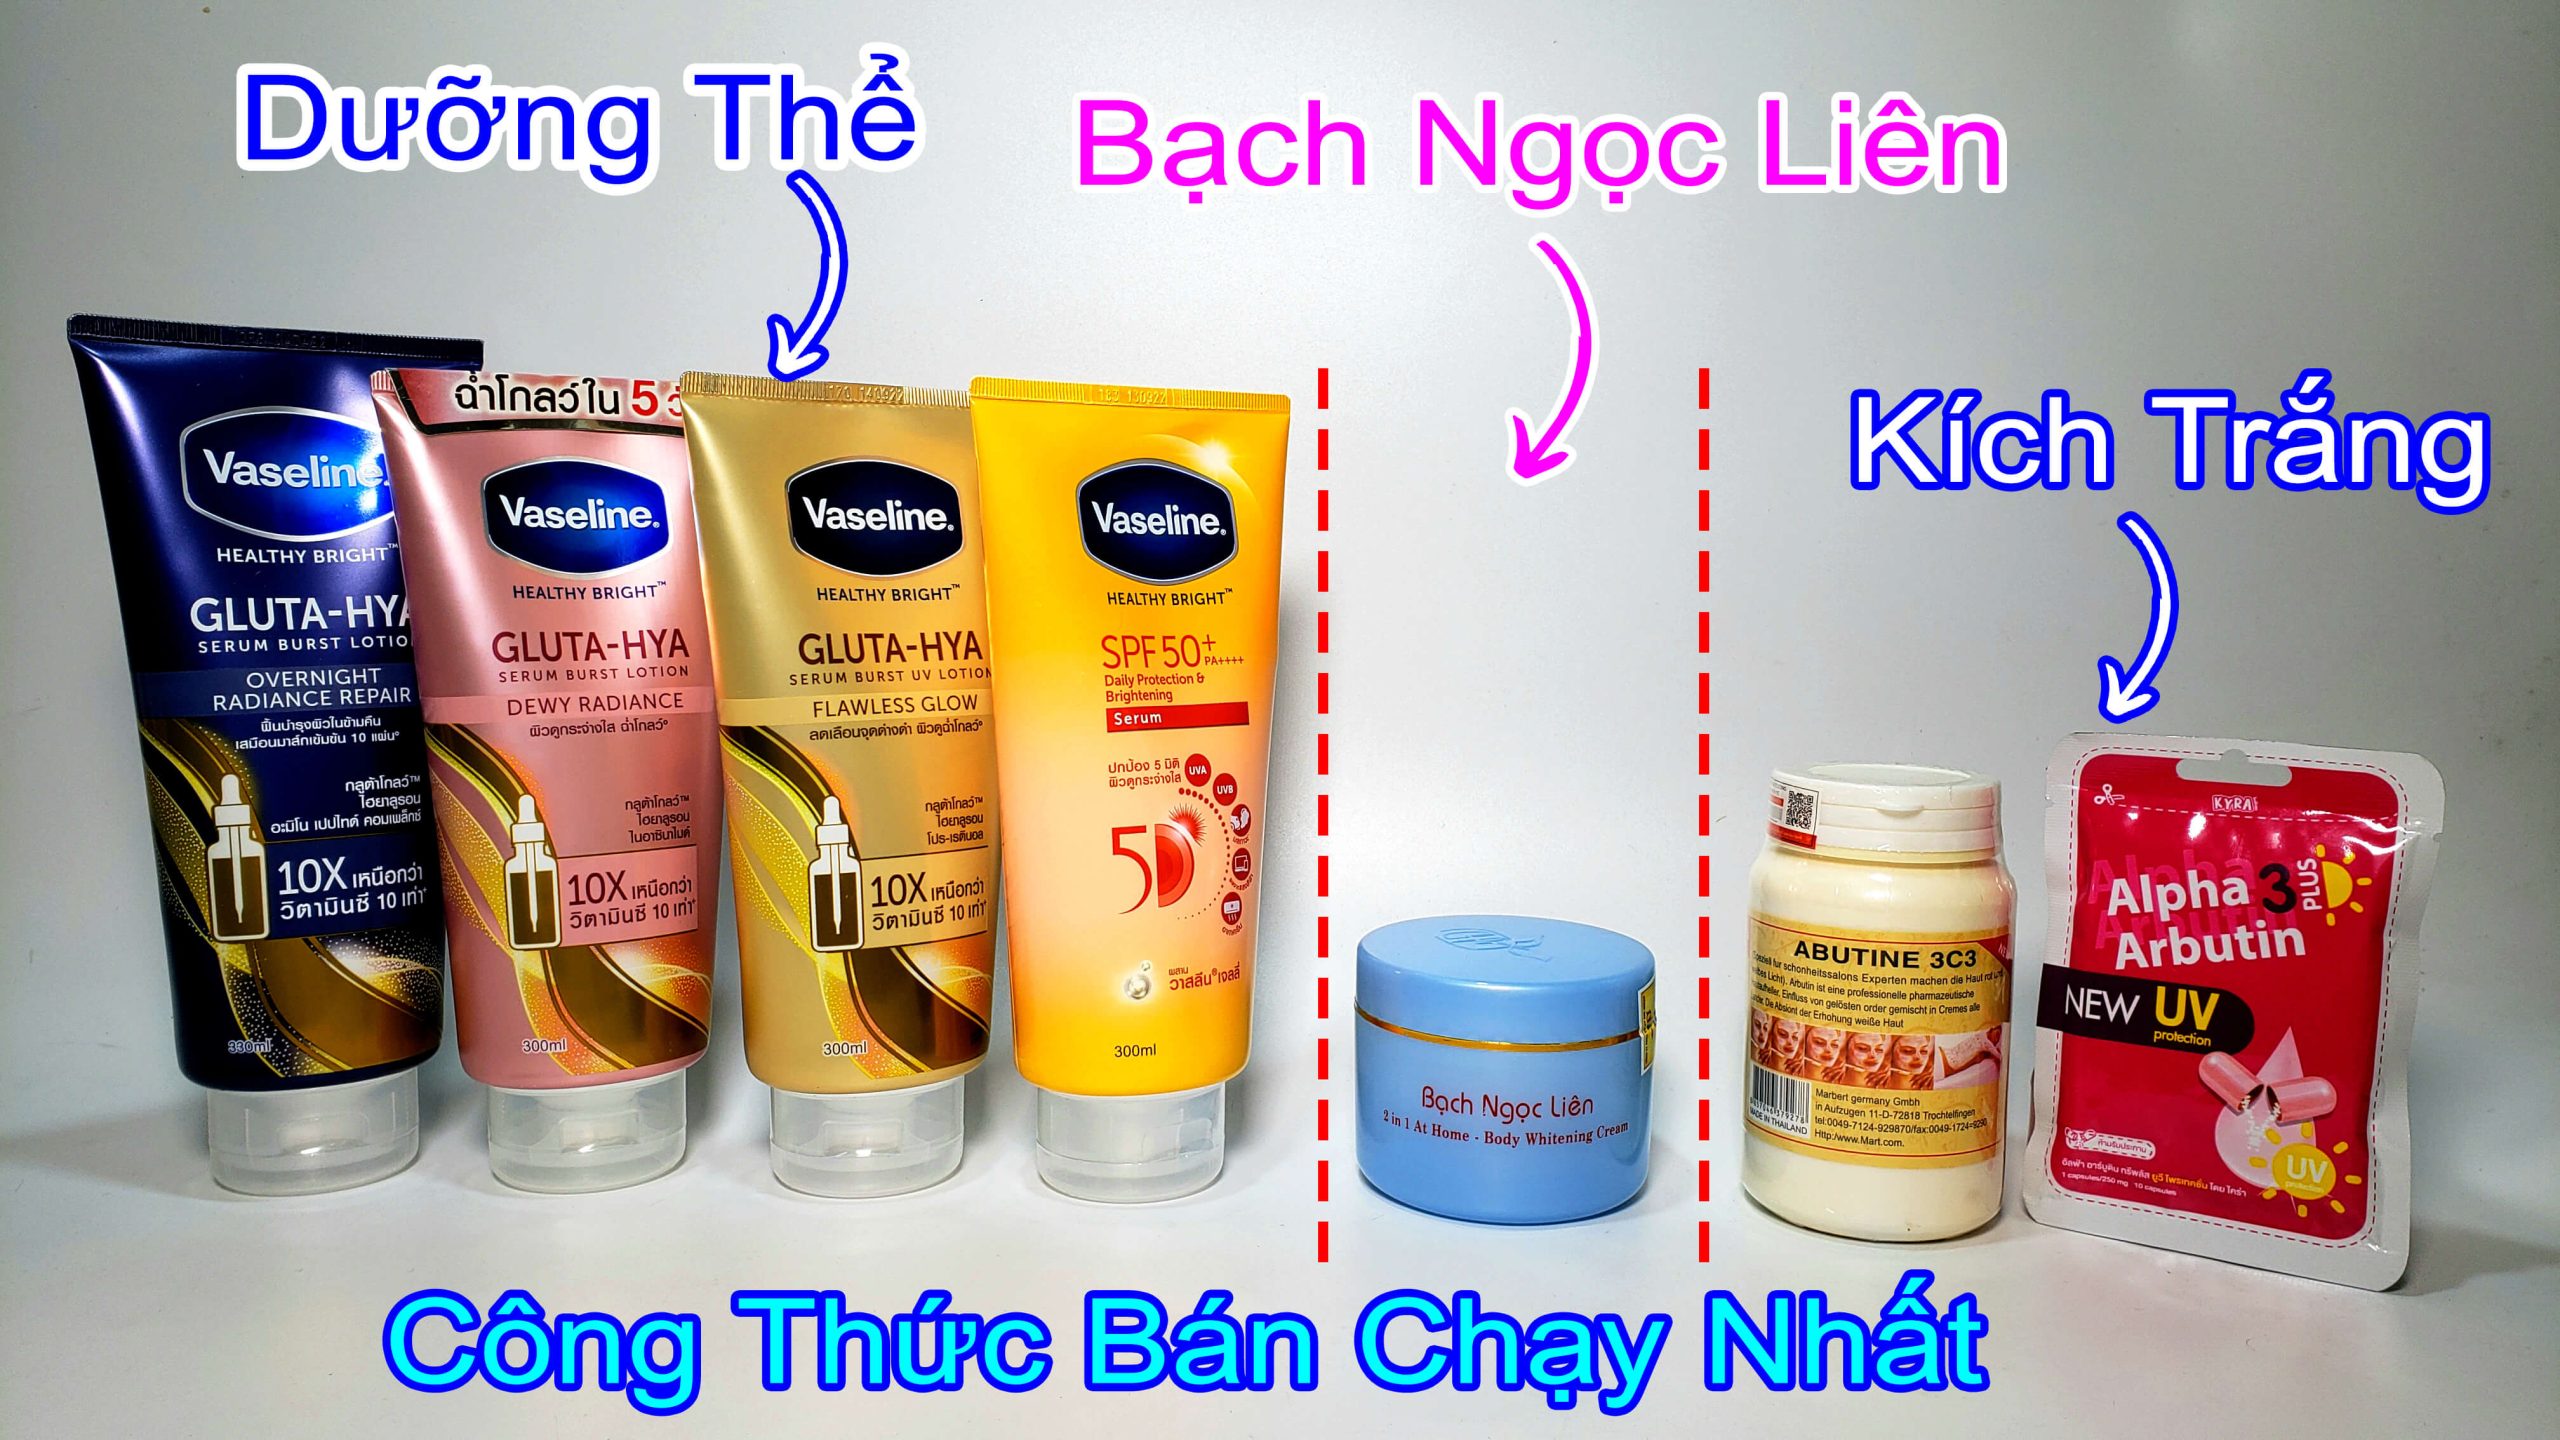 Cong-thuc-tron-kem-bach-ngoc-lien (1)